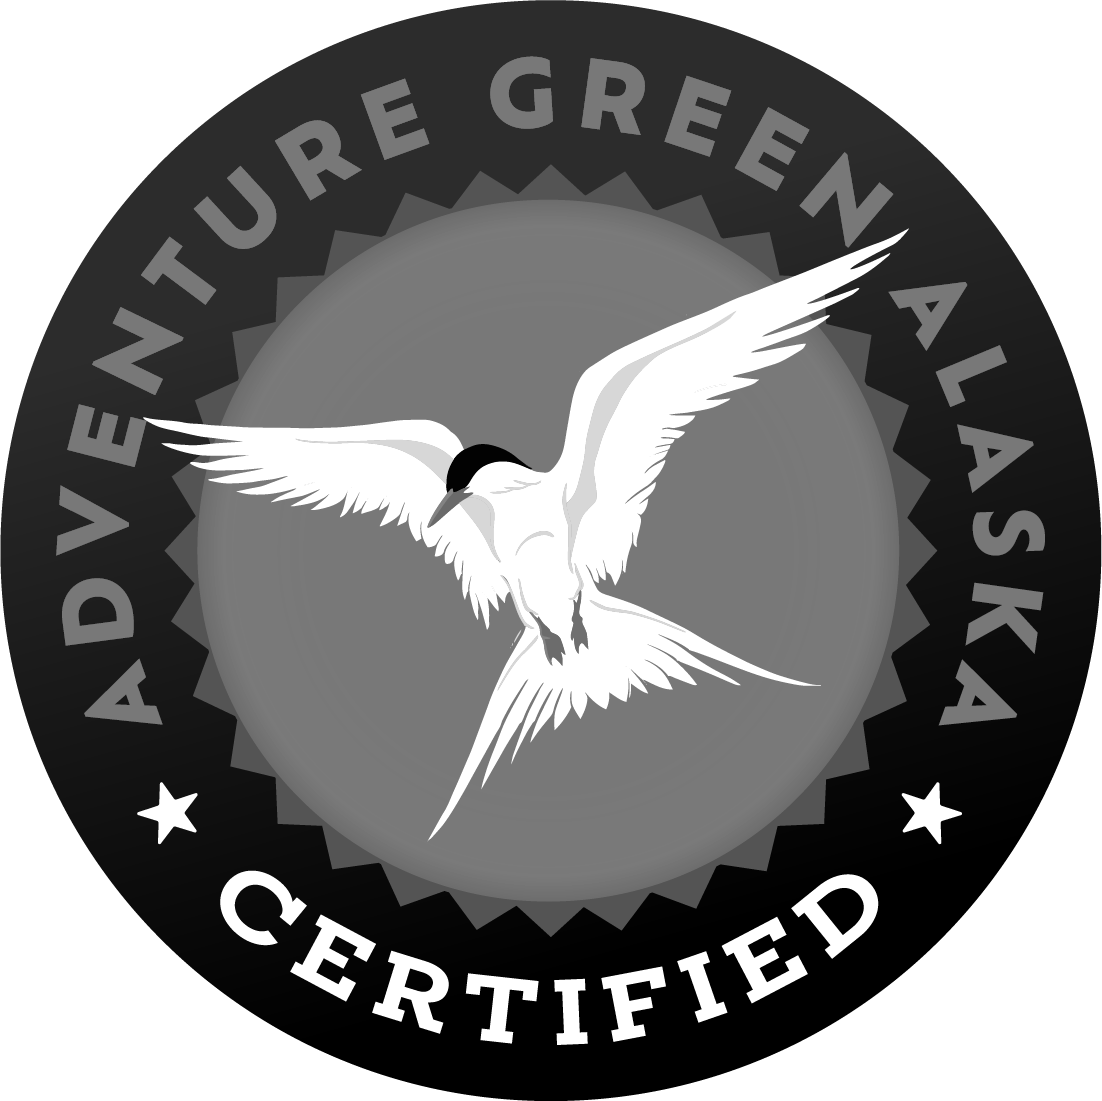 Adventure green alaska certified